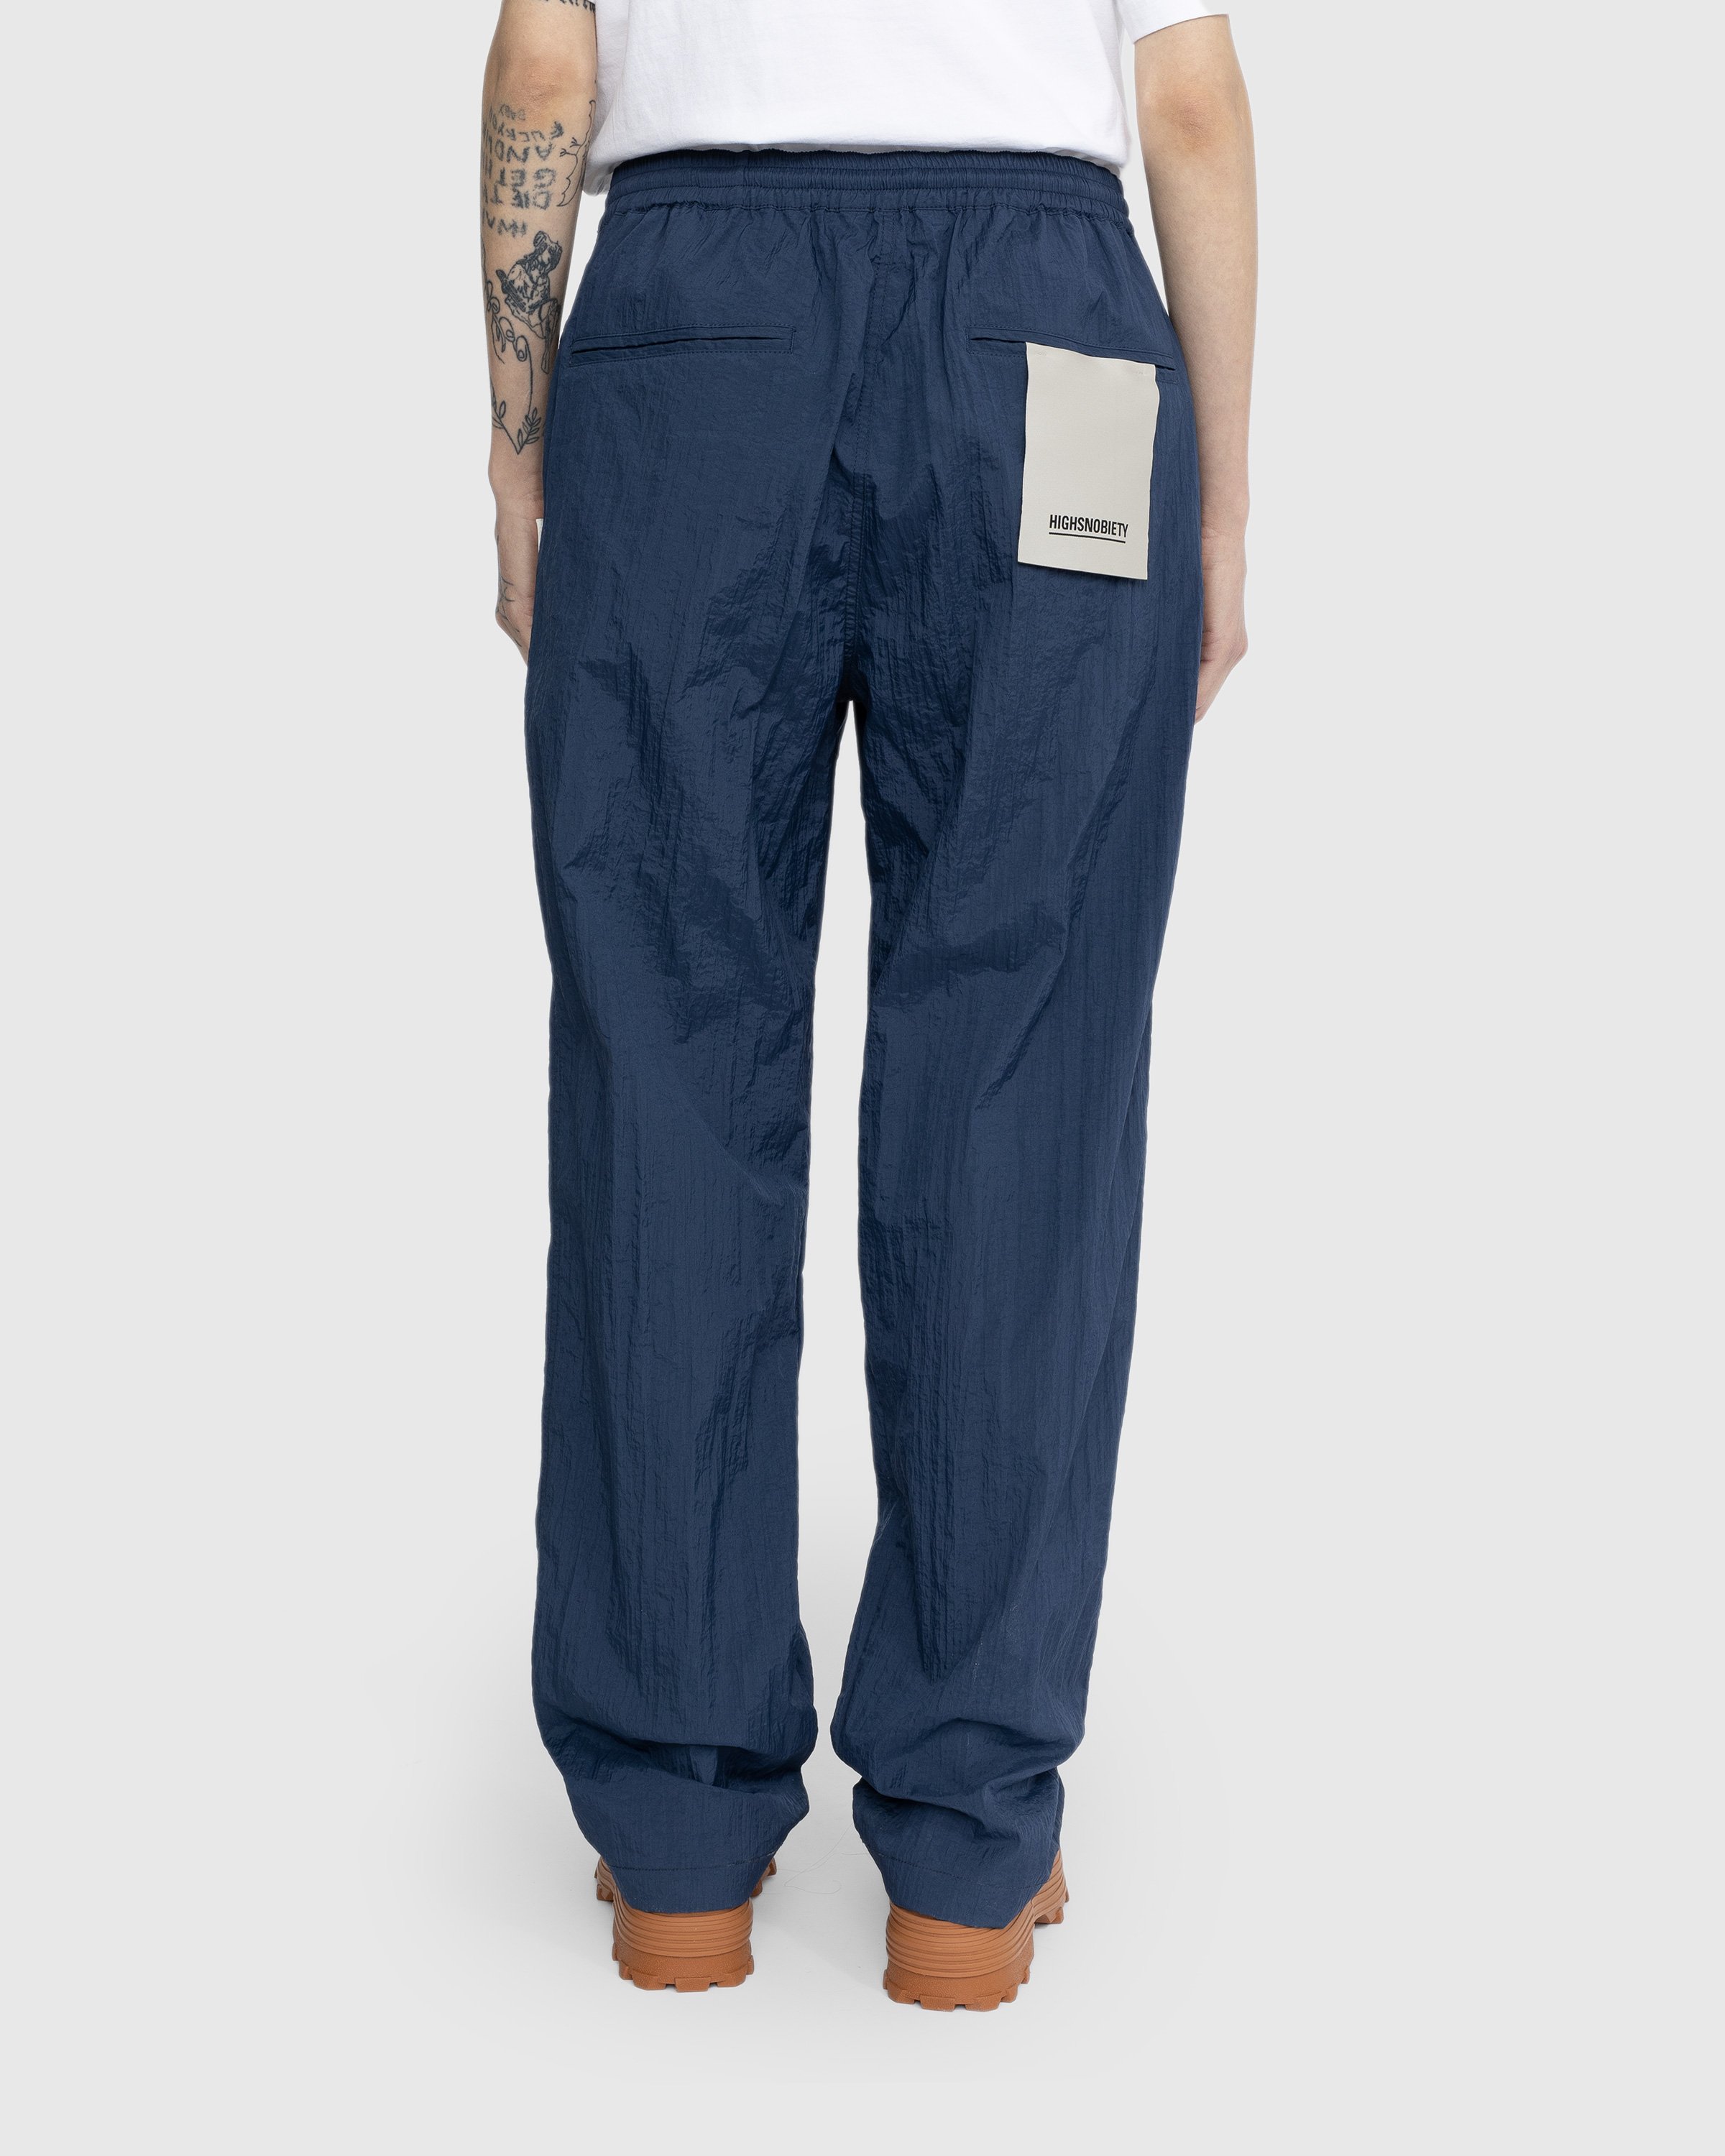 Highsnobiety - Texture Nylon Pants Navy - Clothing - Blue - Image 2